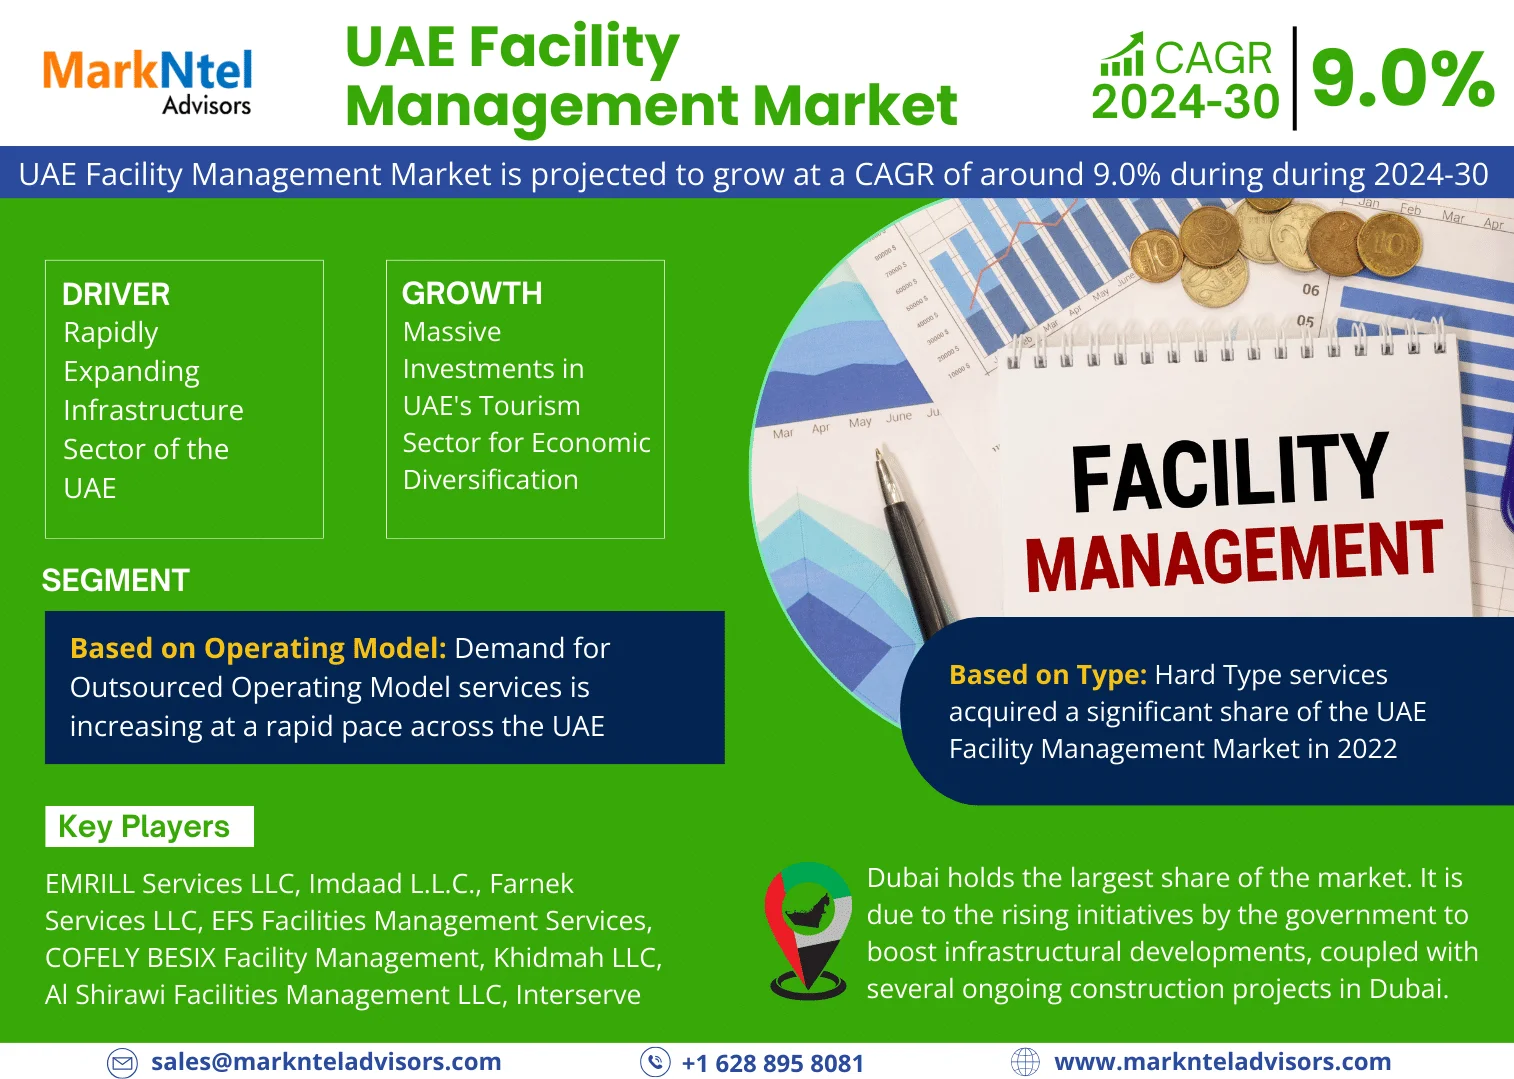 UAE Facility Management Market Gears Up for Impressive 9.0% CAGR Surge in 2024-2030.